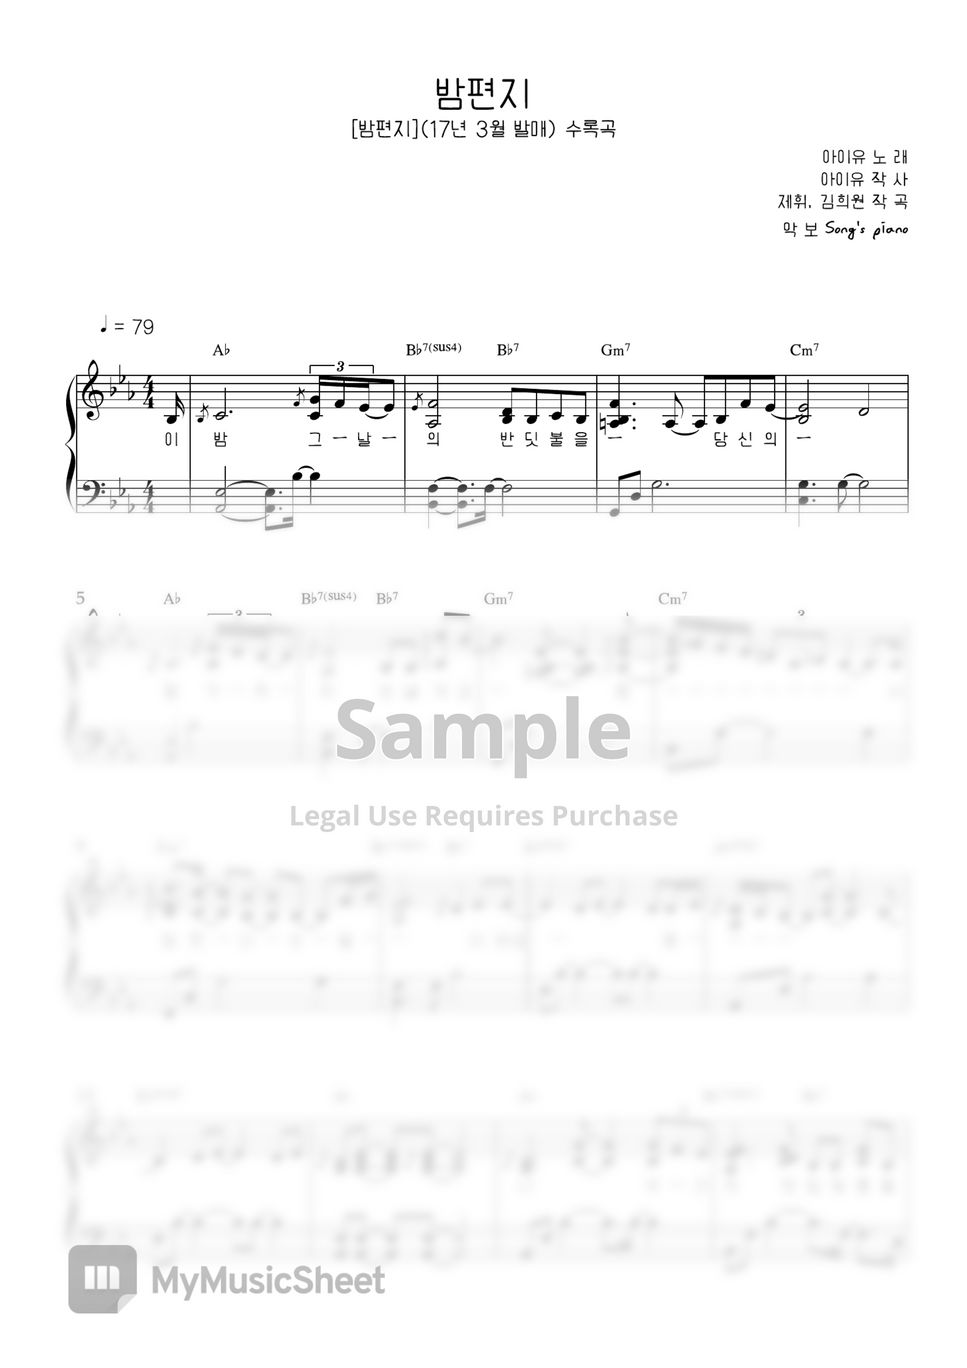 IU - Through the Night (원키, 쉬운키(DM key)) by Song's piano